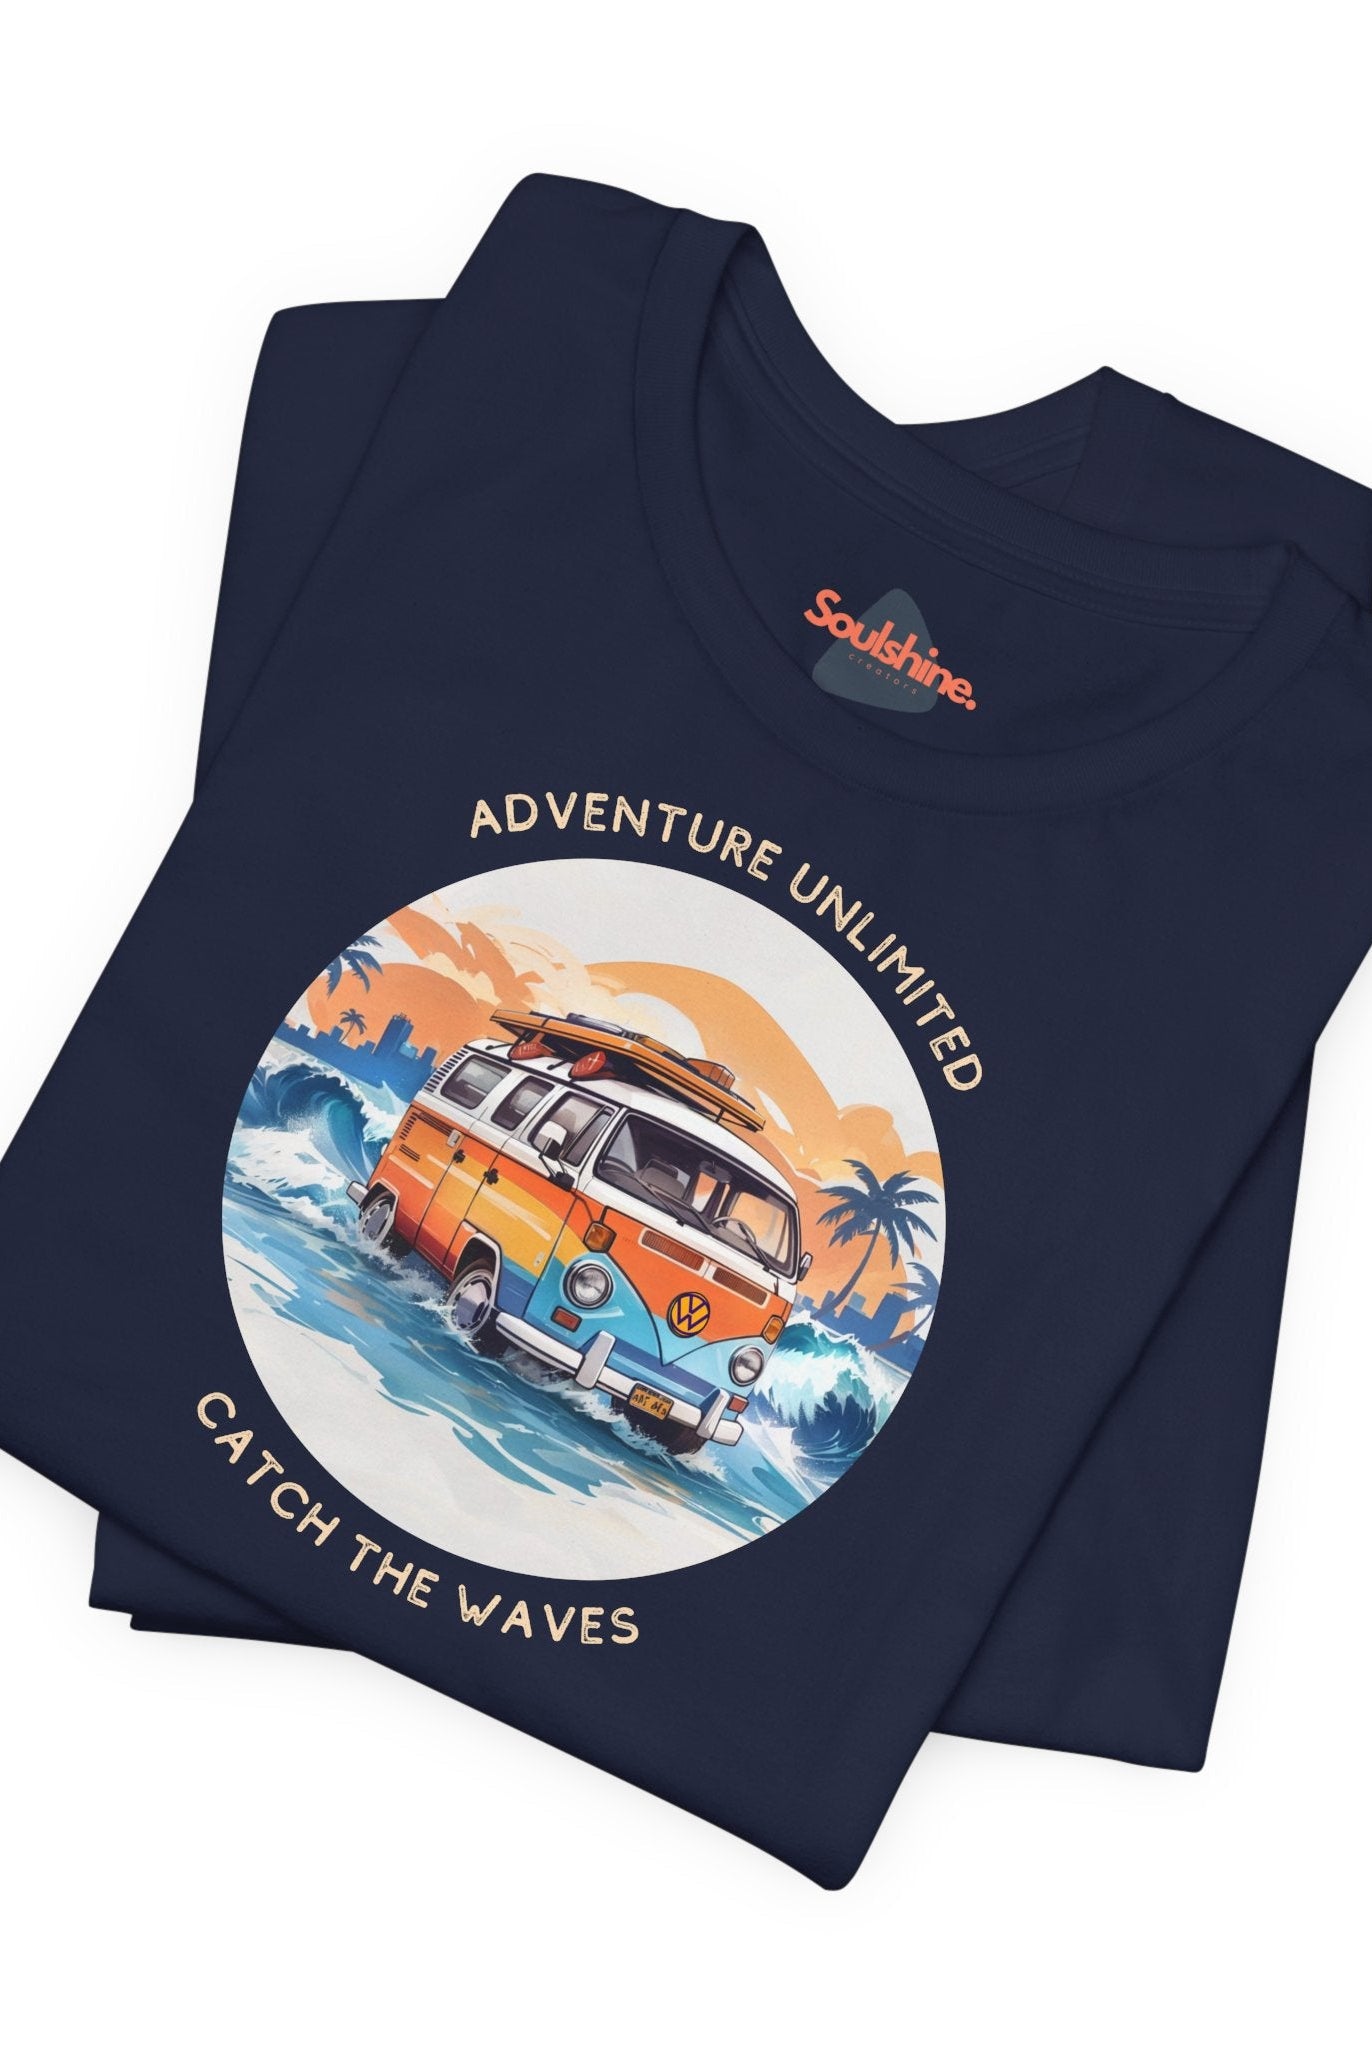 Adventure Unlimited Surfing T-Shirt - Direct-to-Garment Printed Navy Van Driving Through Ocean